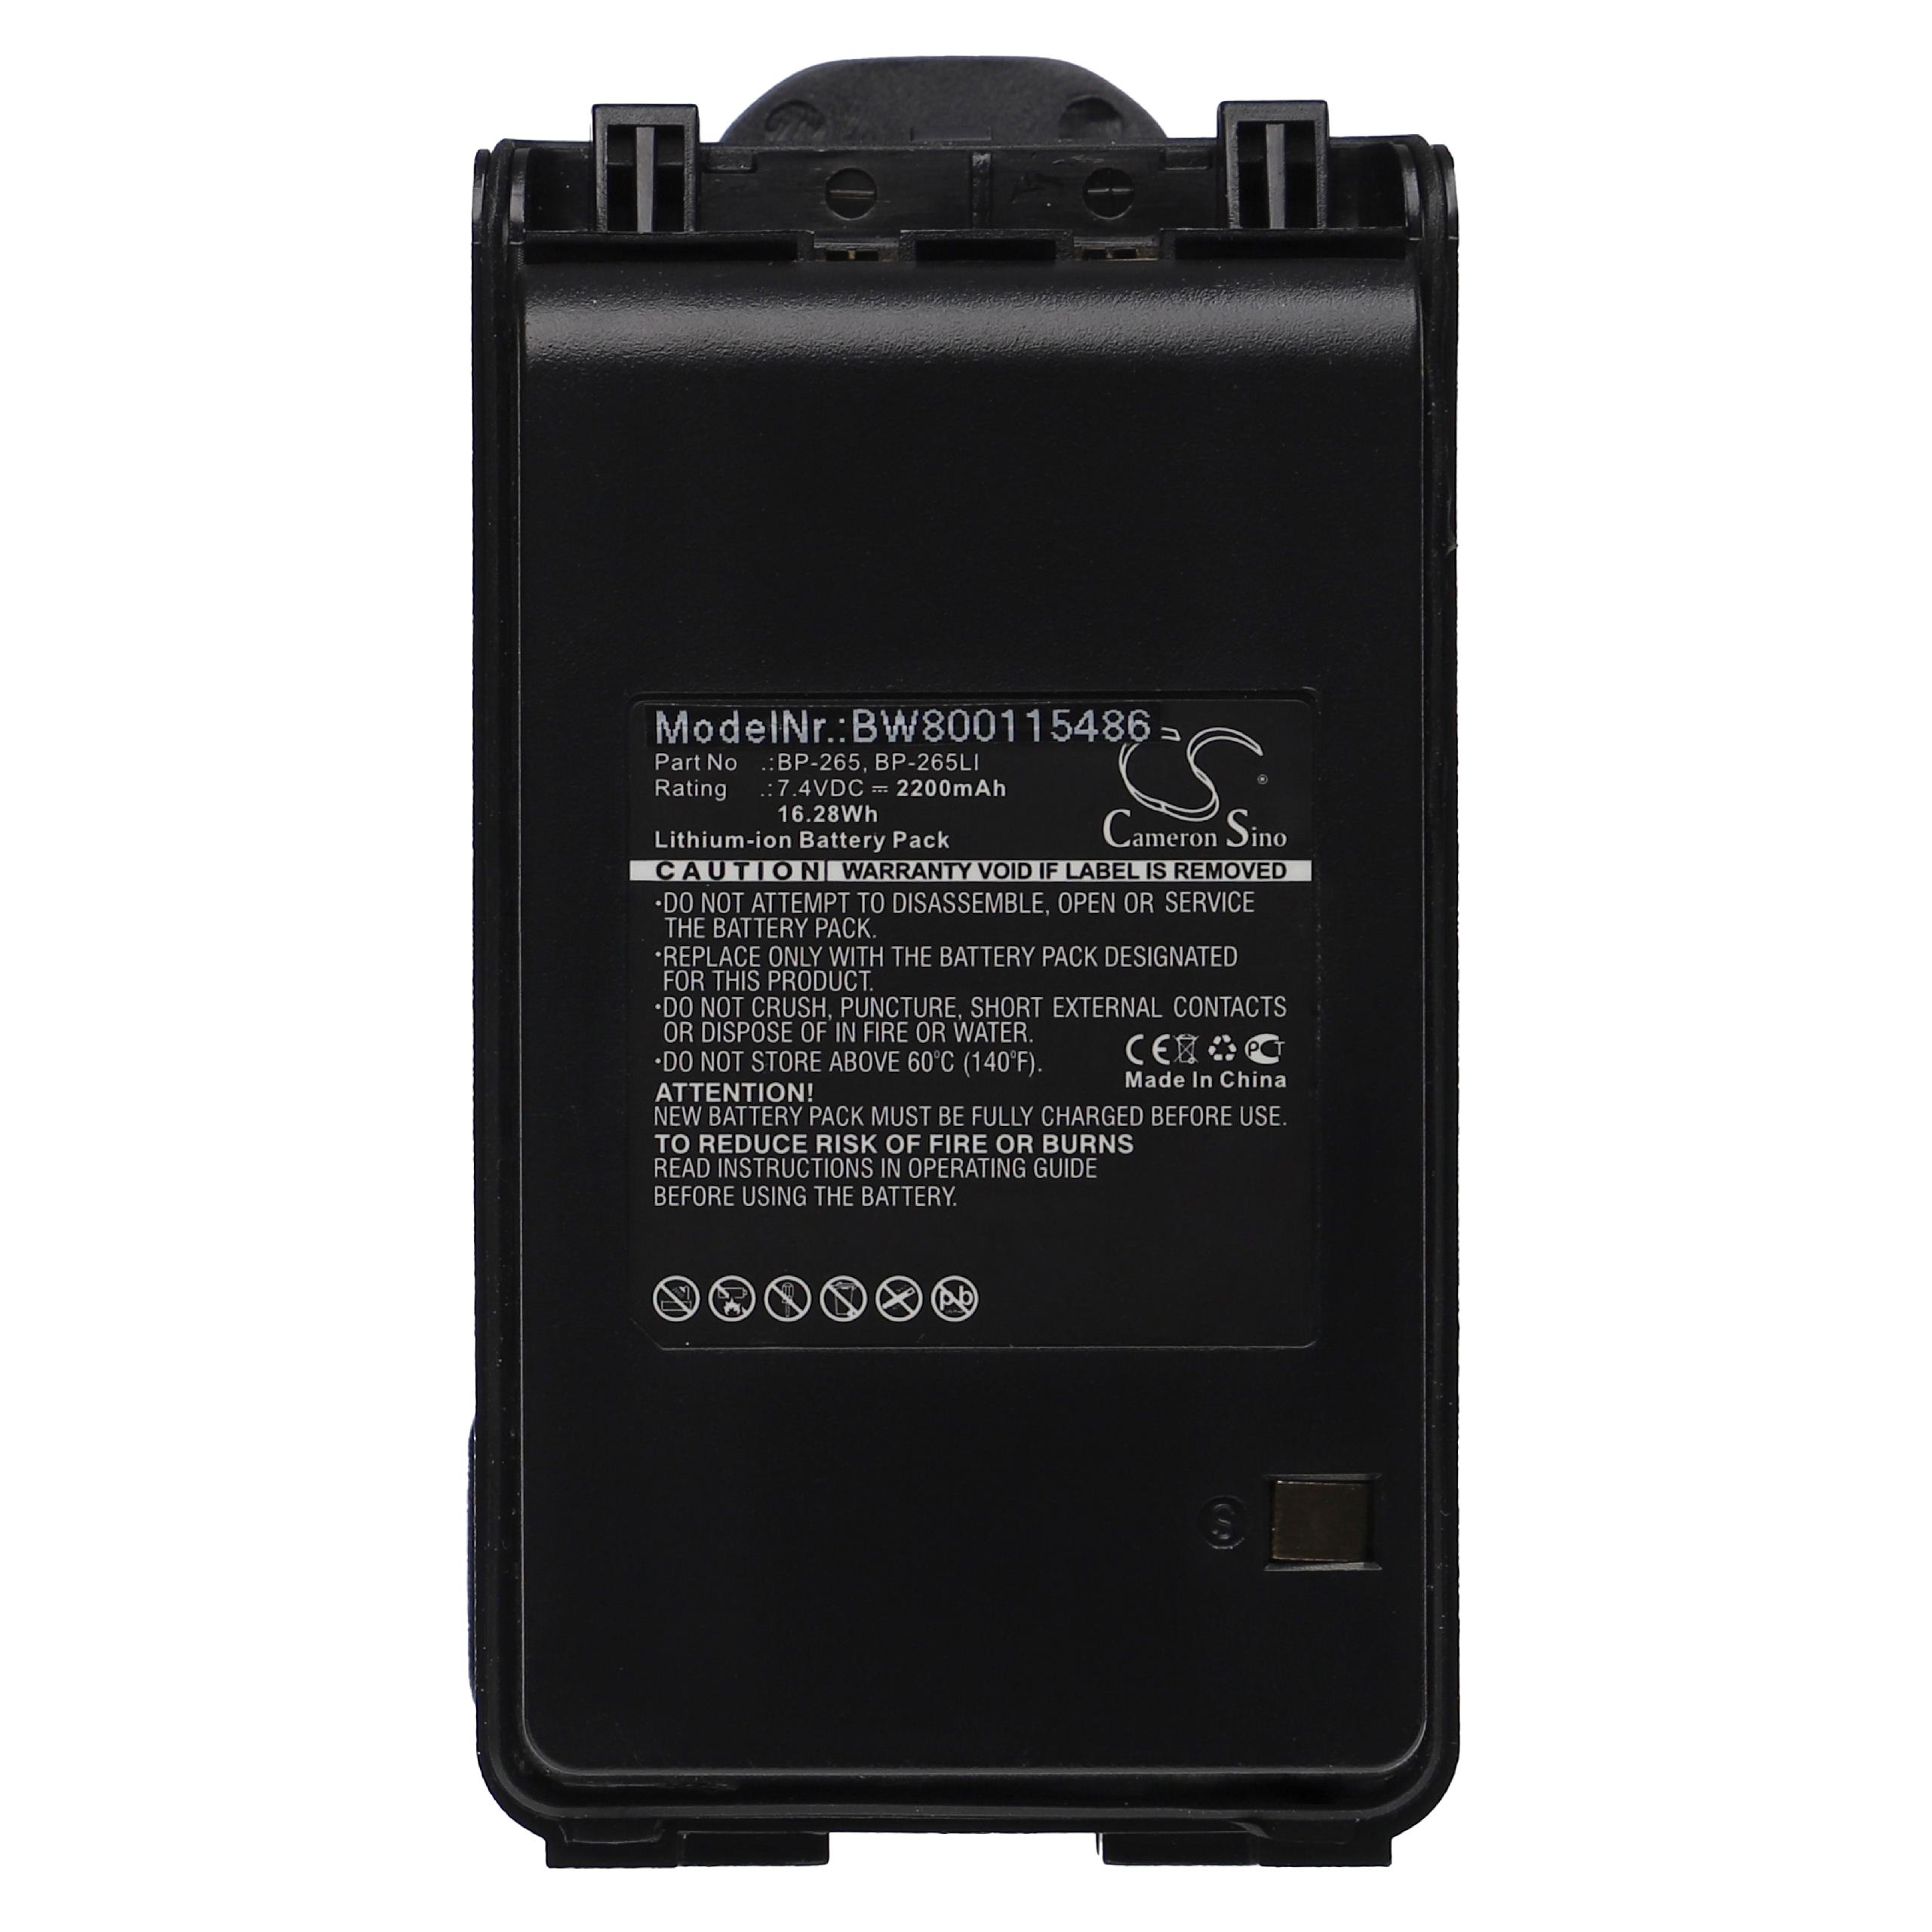 Batería reemplaza Icom BP-265LI, BP-265 para radio, walkie-talkie Icom - 2200 mAh 7,4 V Li-Ion con clip